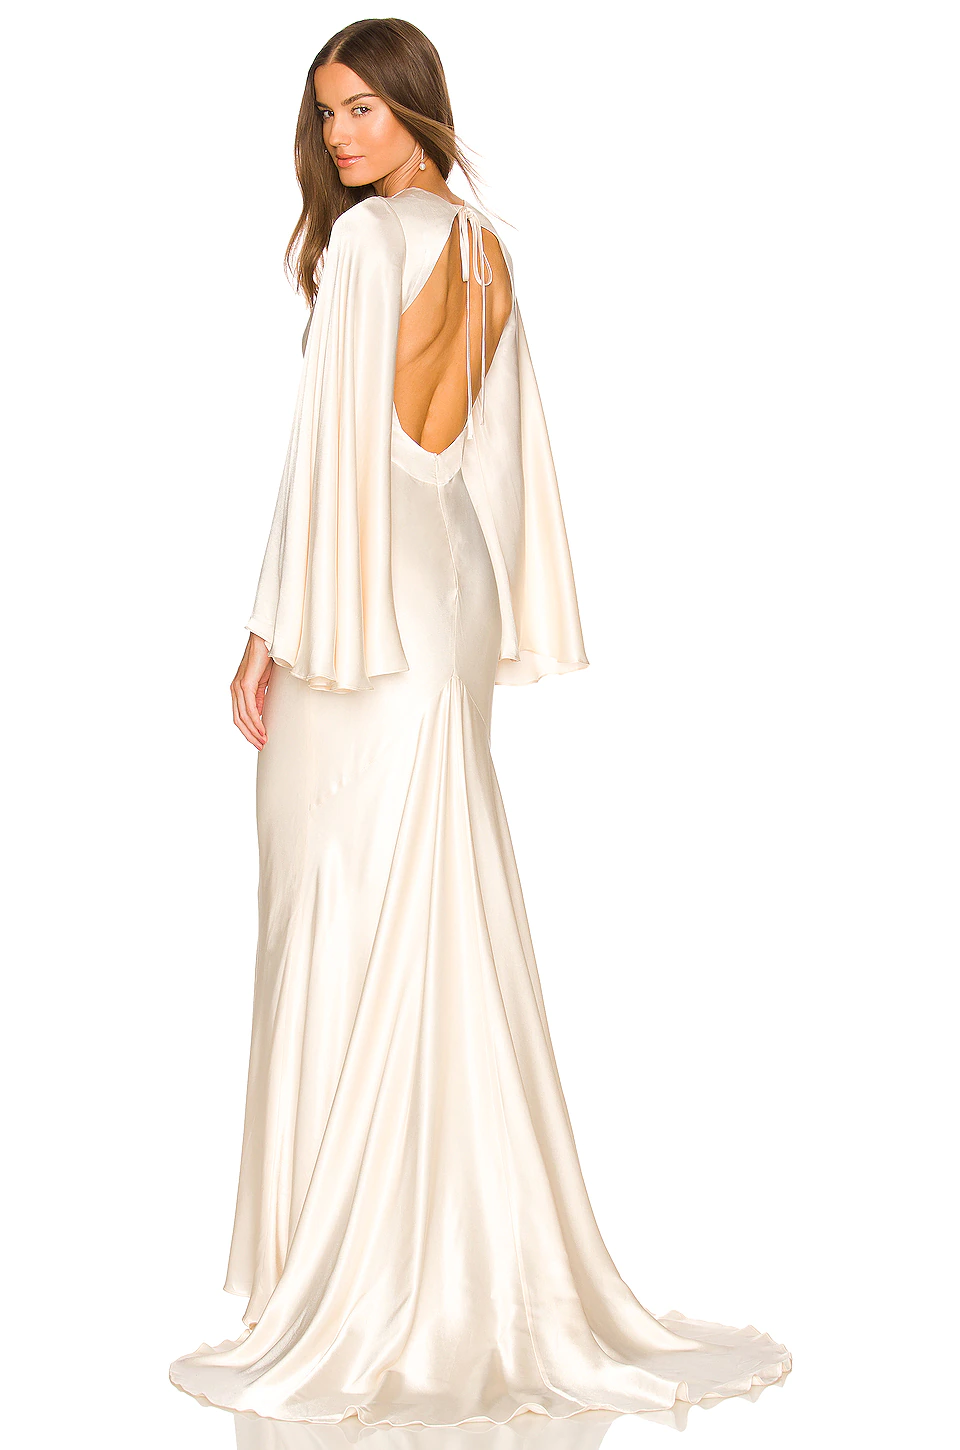 Shona Joy La Lune backless wedding dress